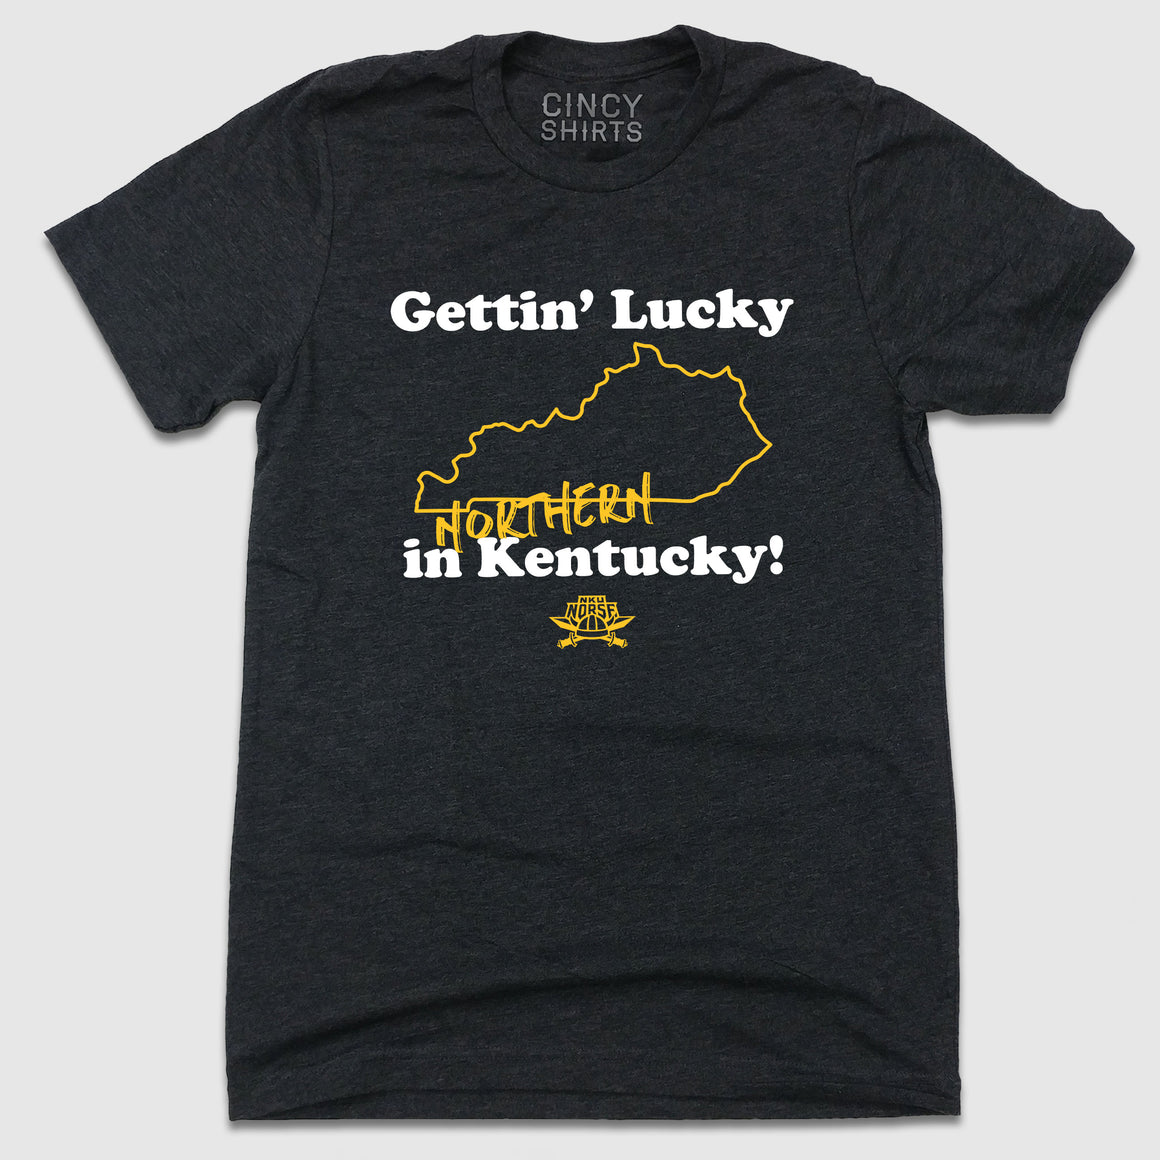 Gettin' Lucky In Northern Kentucky - Cincy Shirts